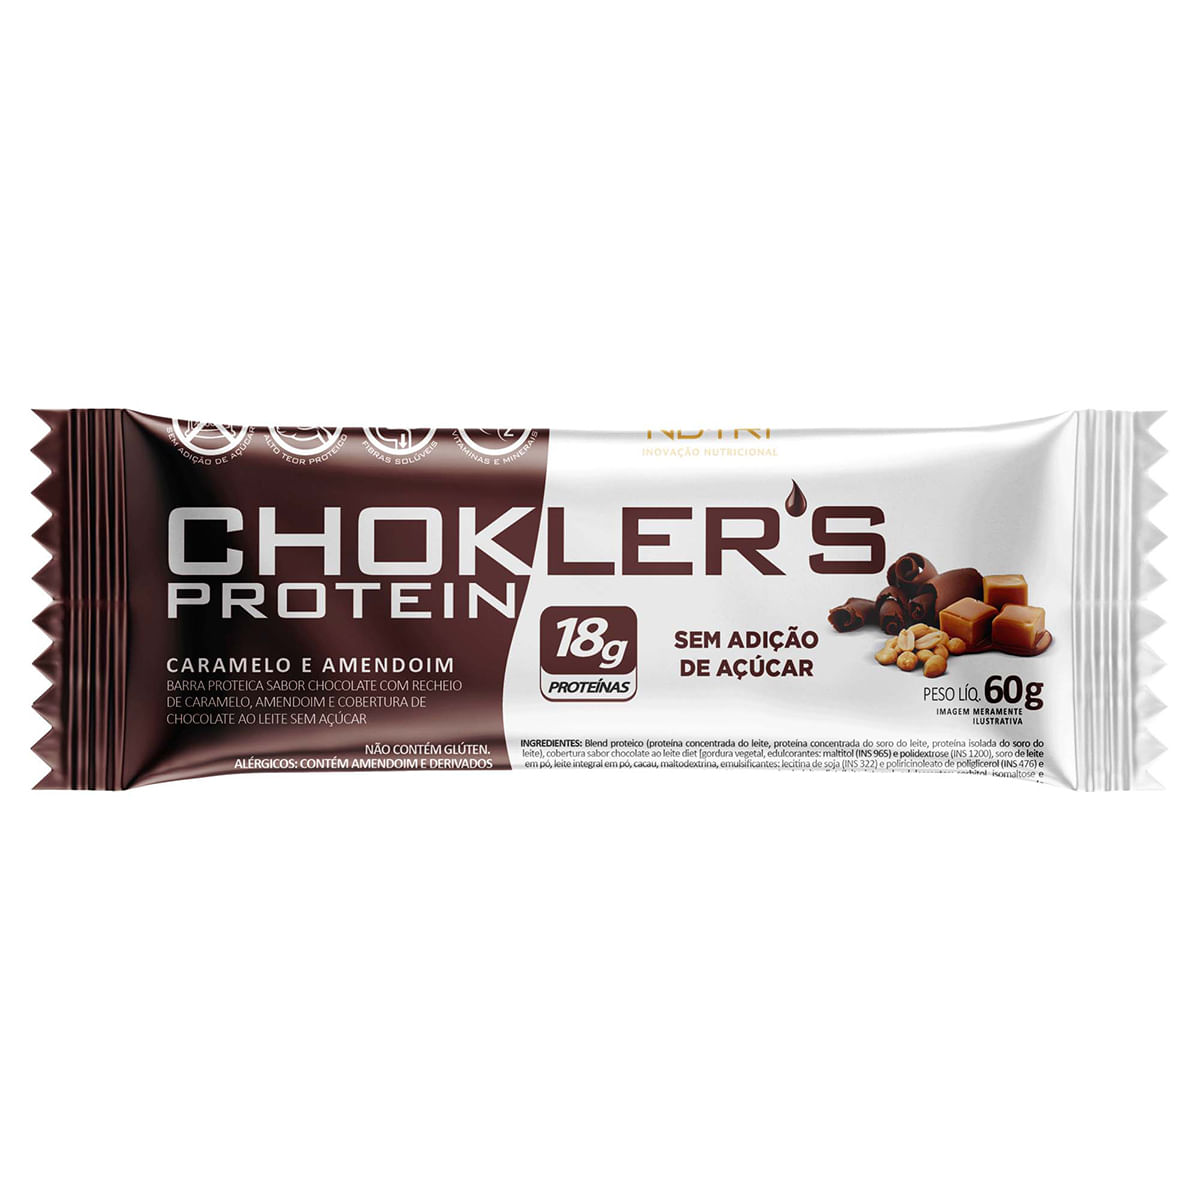 barra-protein-chokler-caram-amendoim-60g-1.jpg